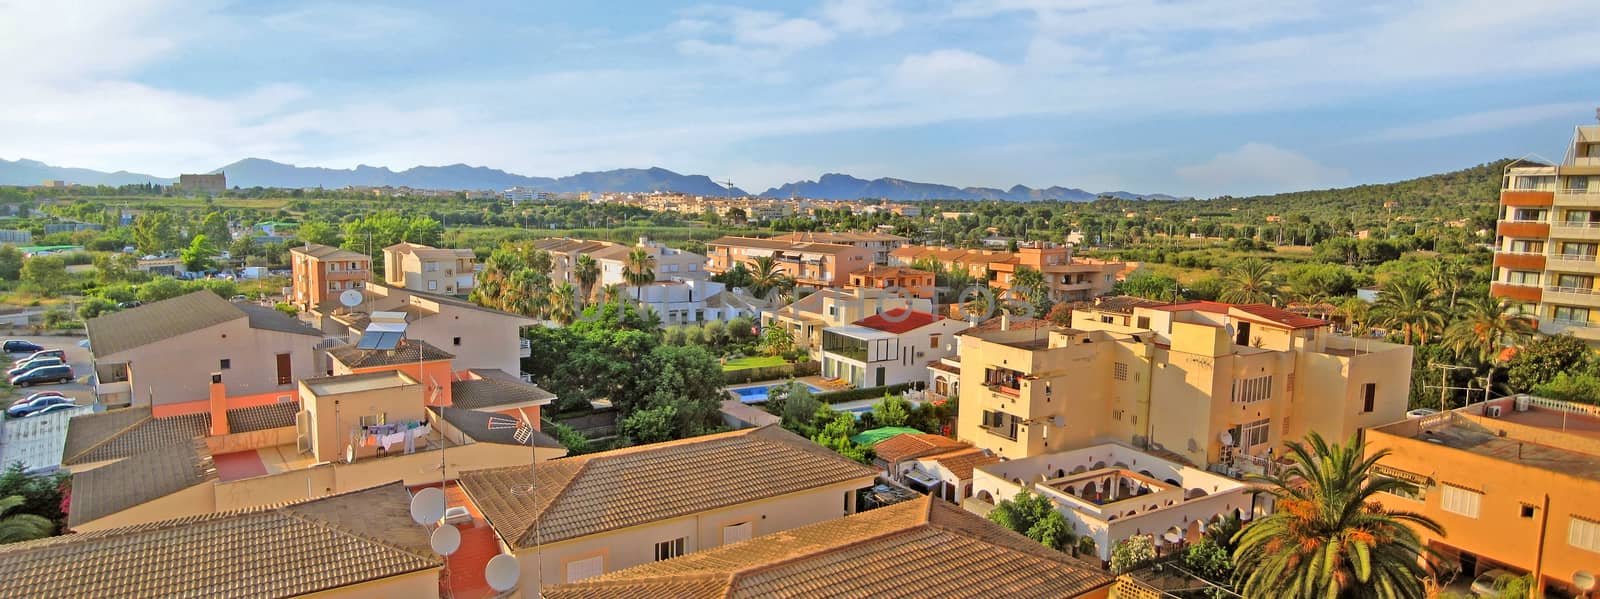 Alcudia, Majorca - panorama view over roofs by aldorado